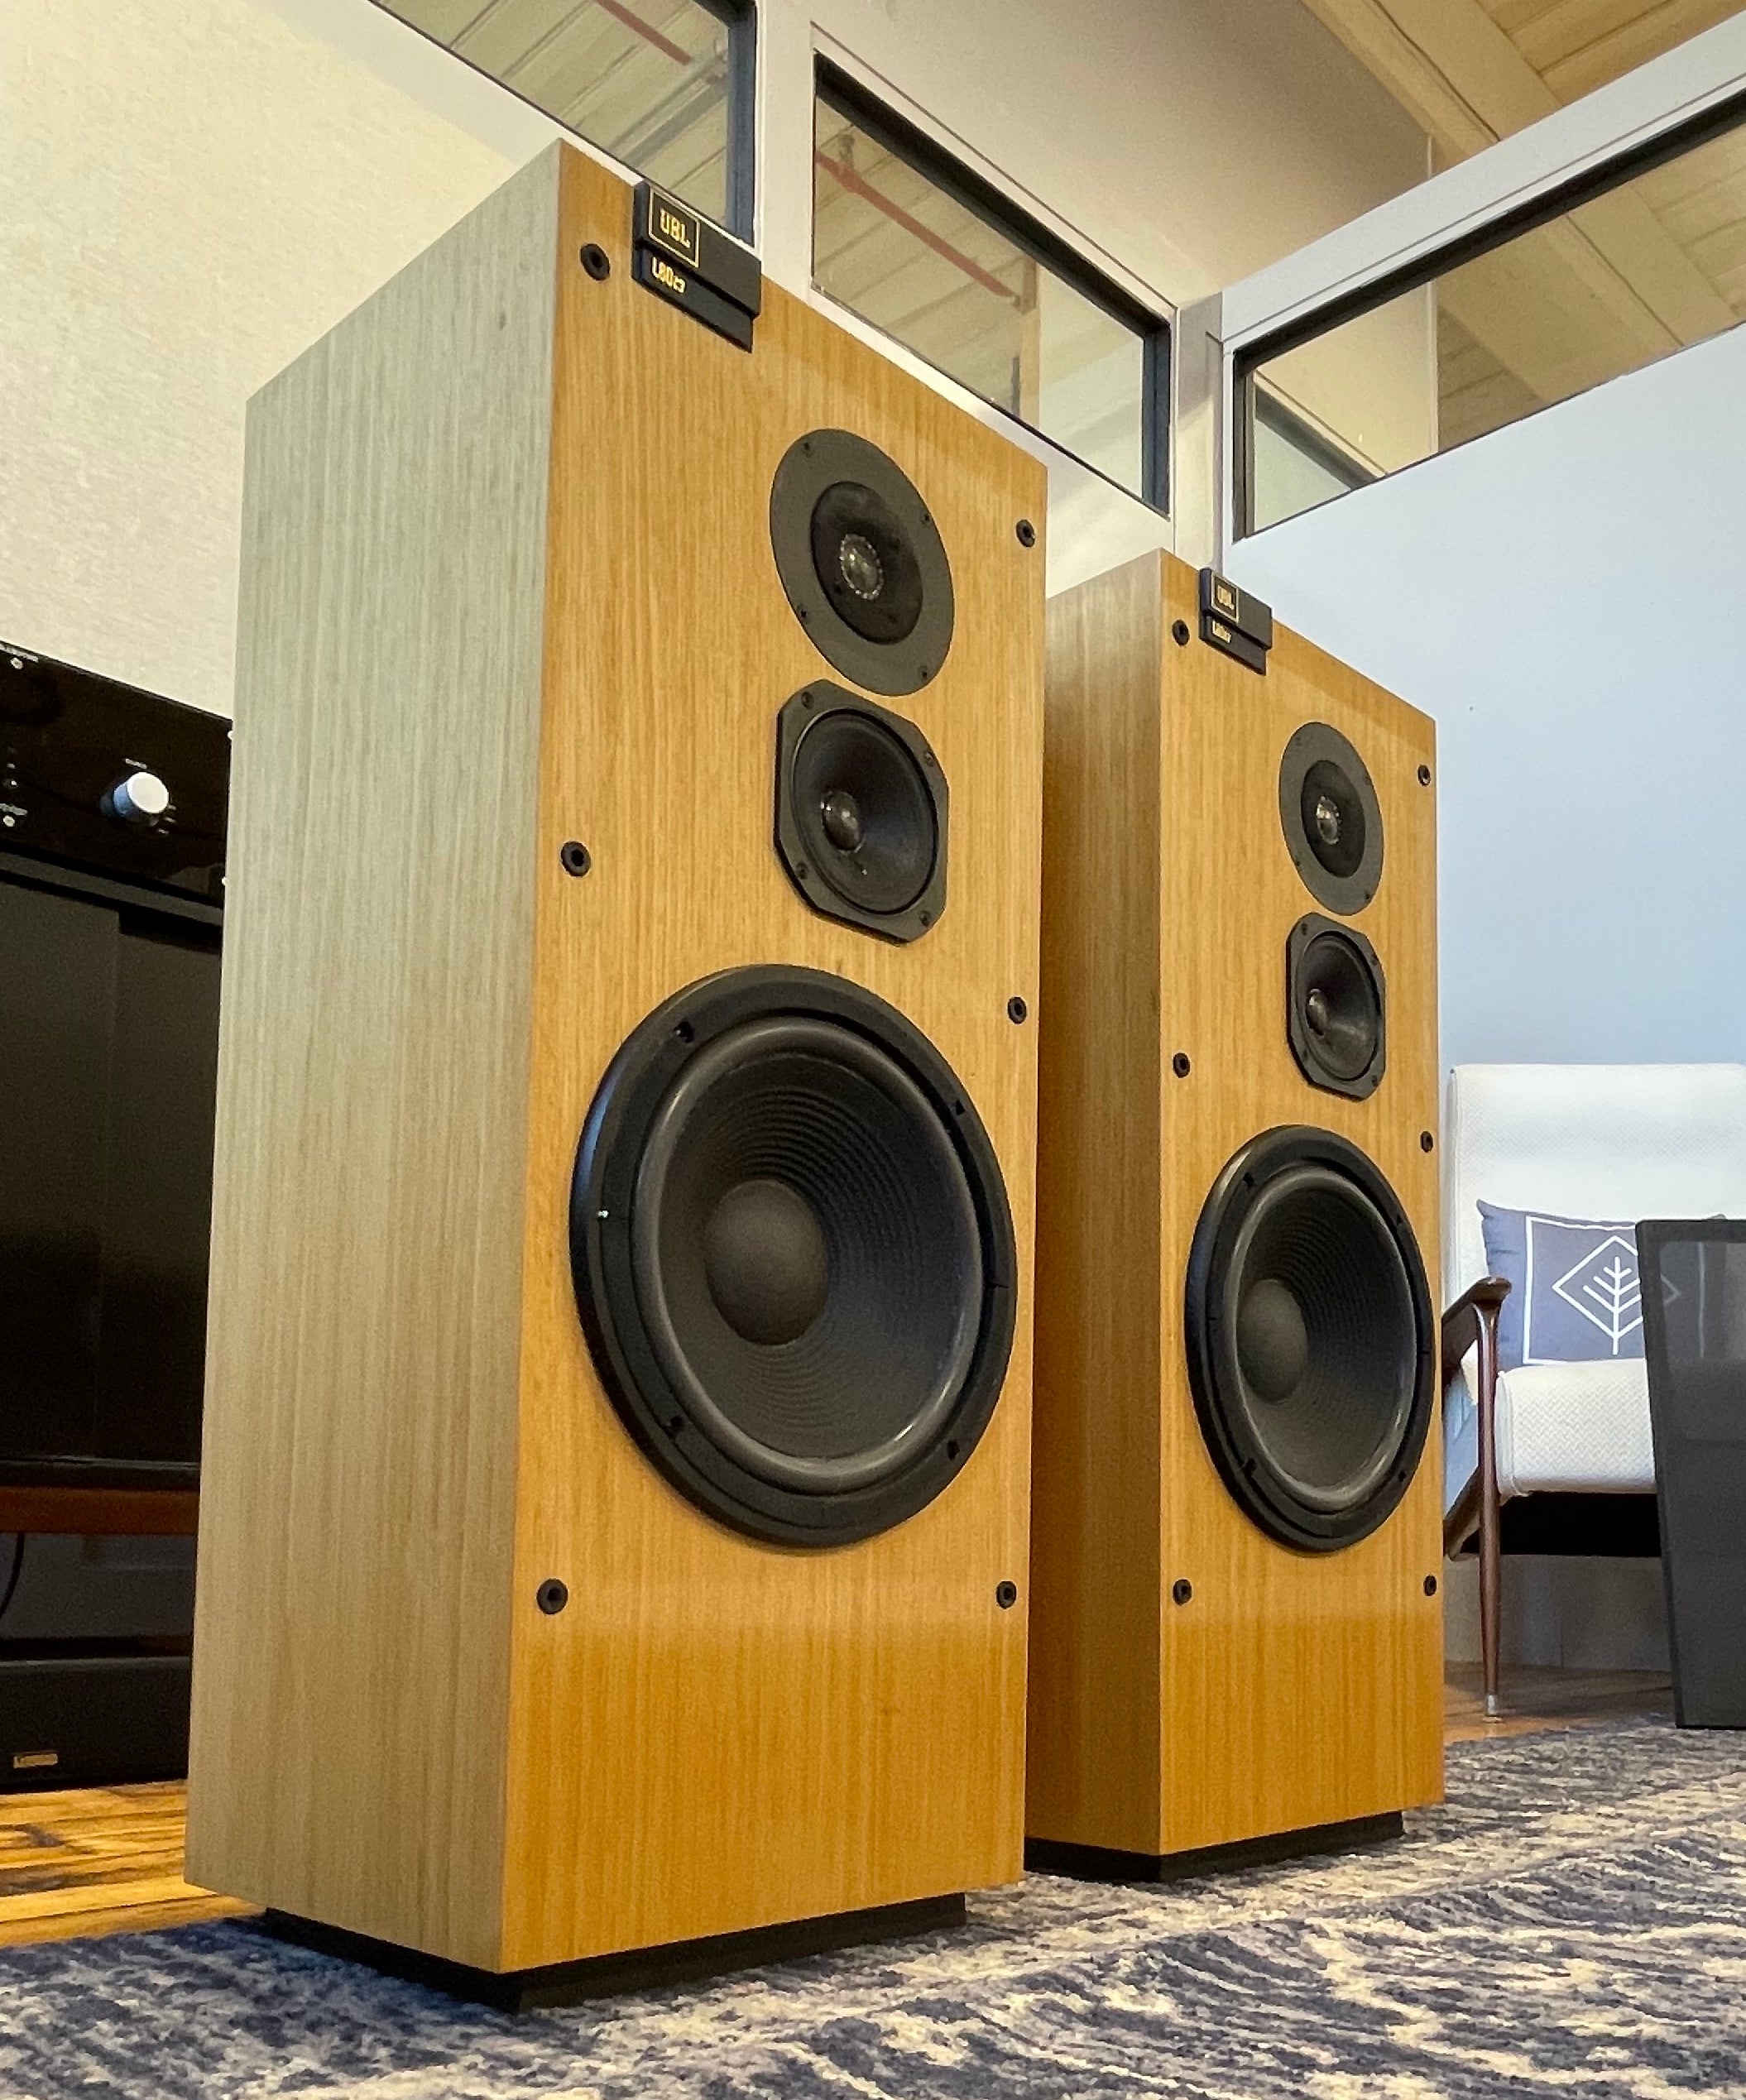 JBL L80t3 Tower Speakers, Maple Finish - SOLD